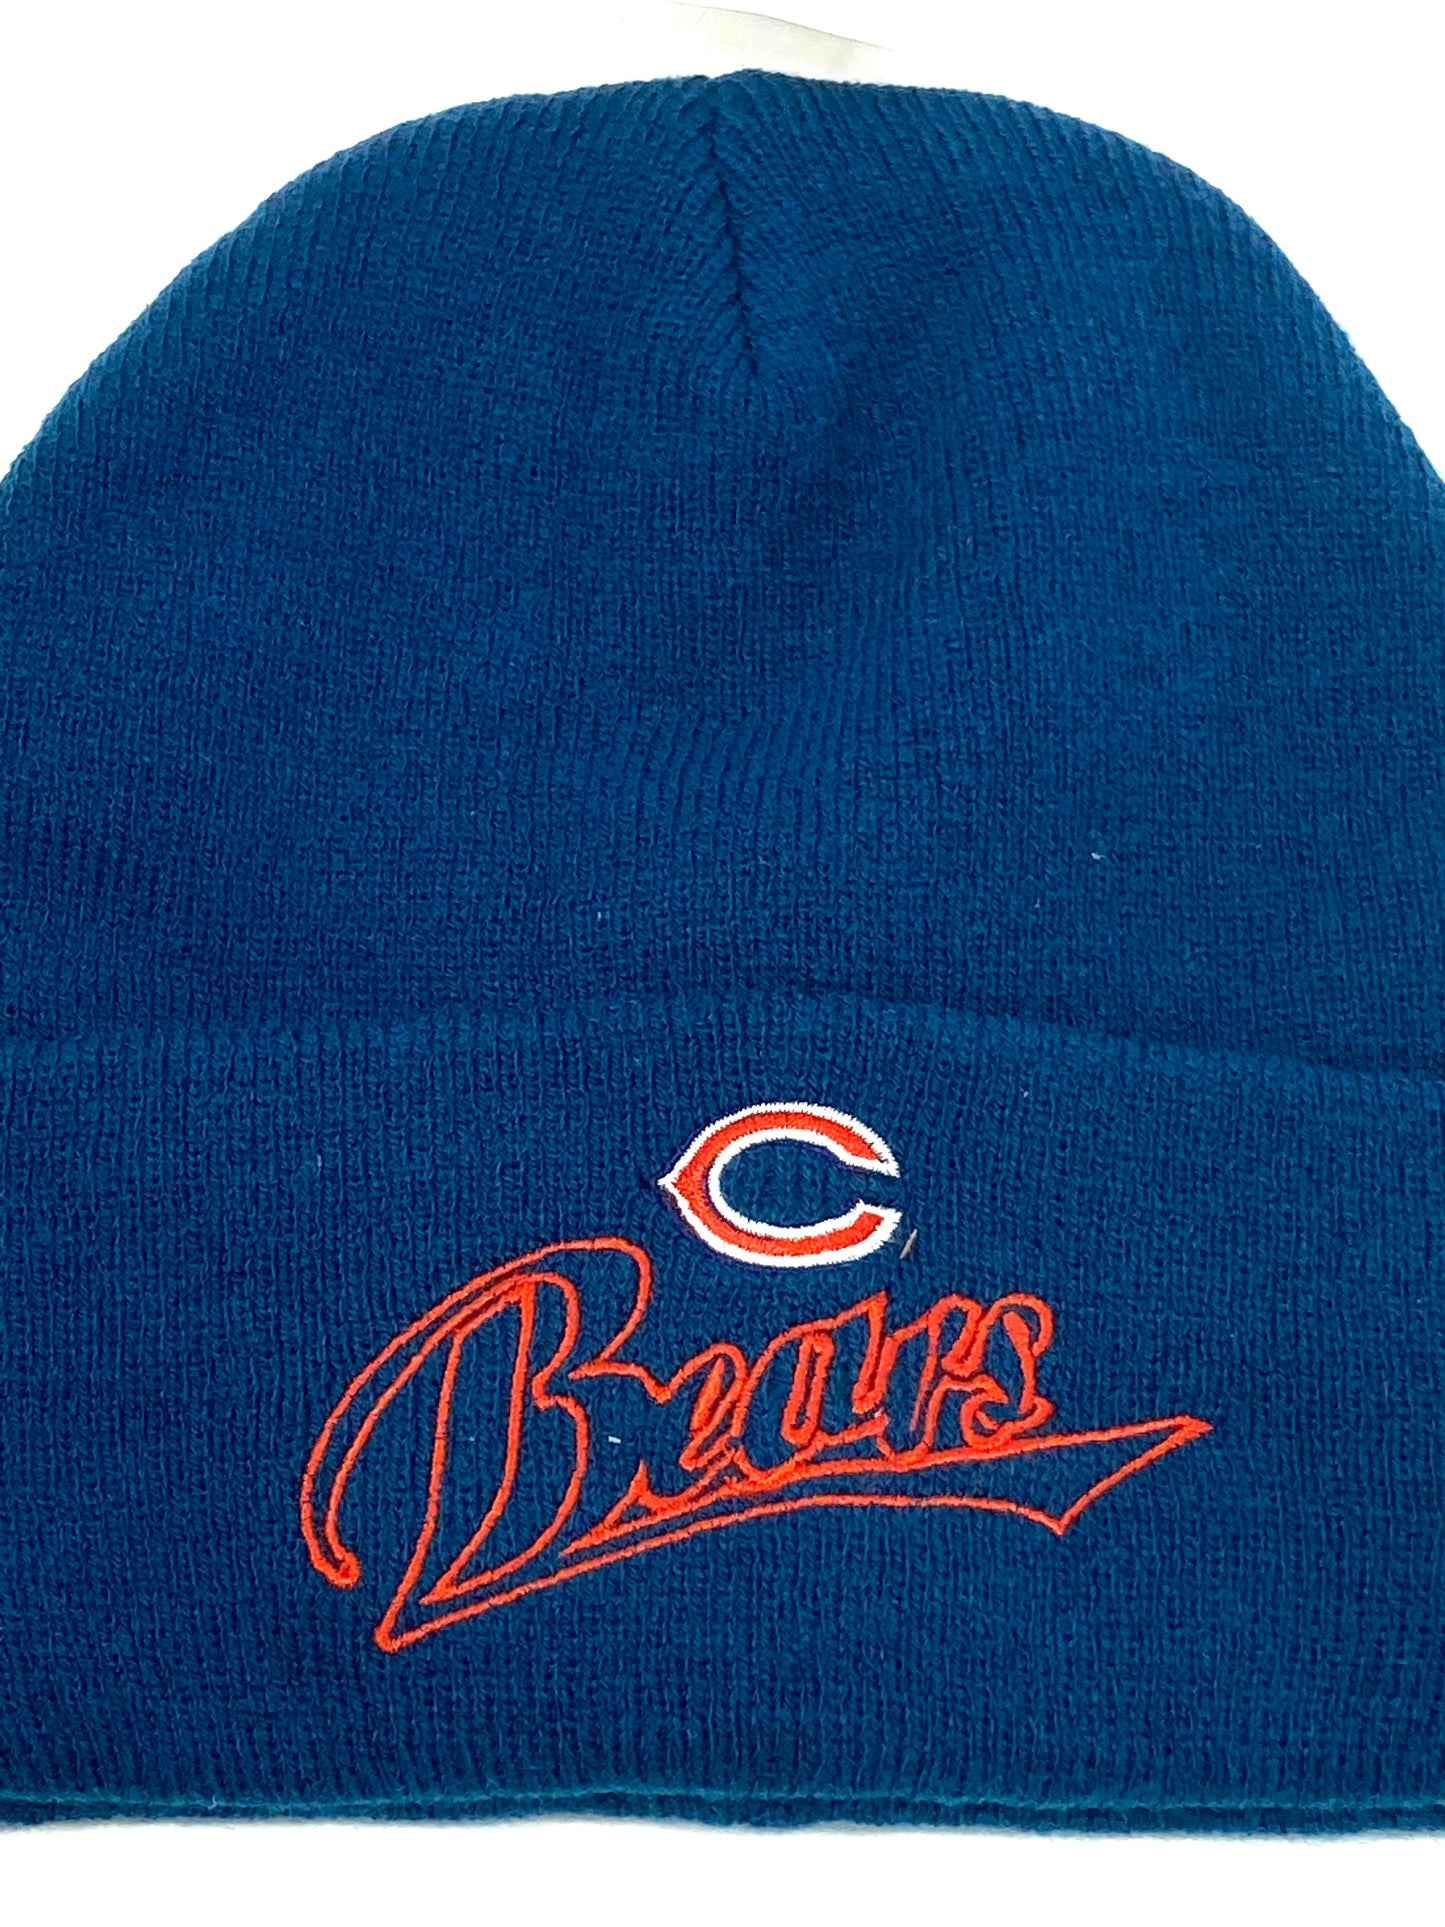 Chicago Bears Vintage NFL Cuffed Knit Logo Hat by Drew Pearson Marketing